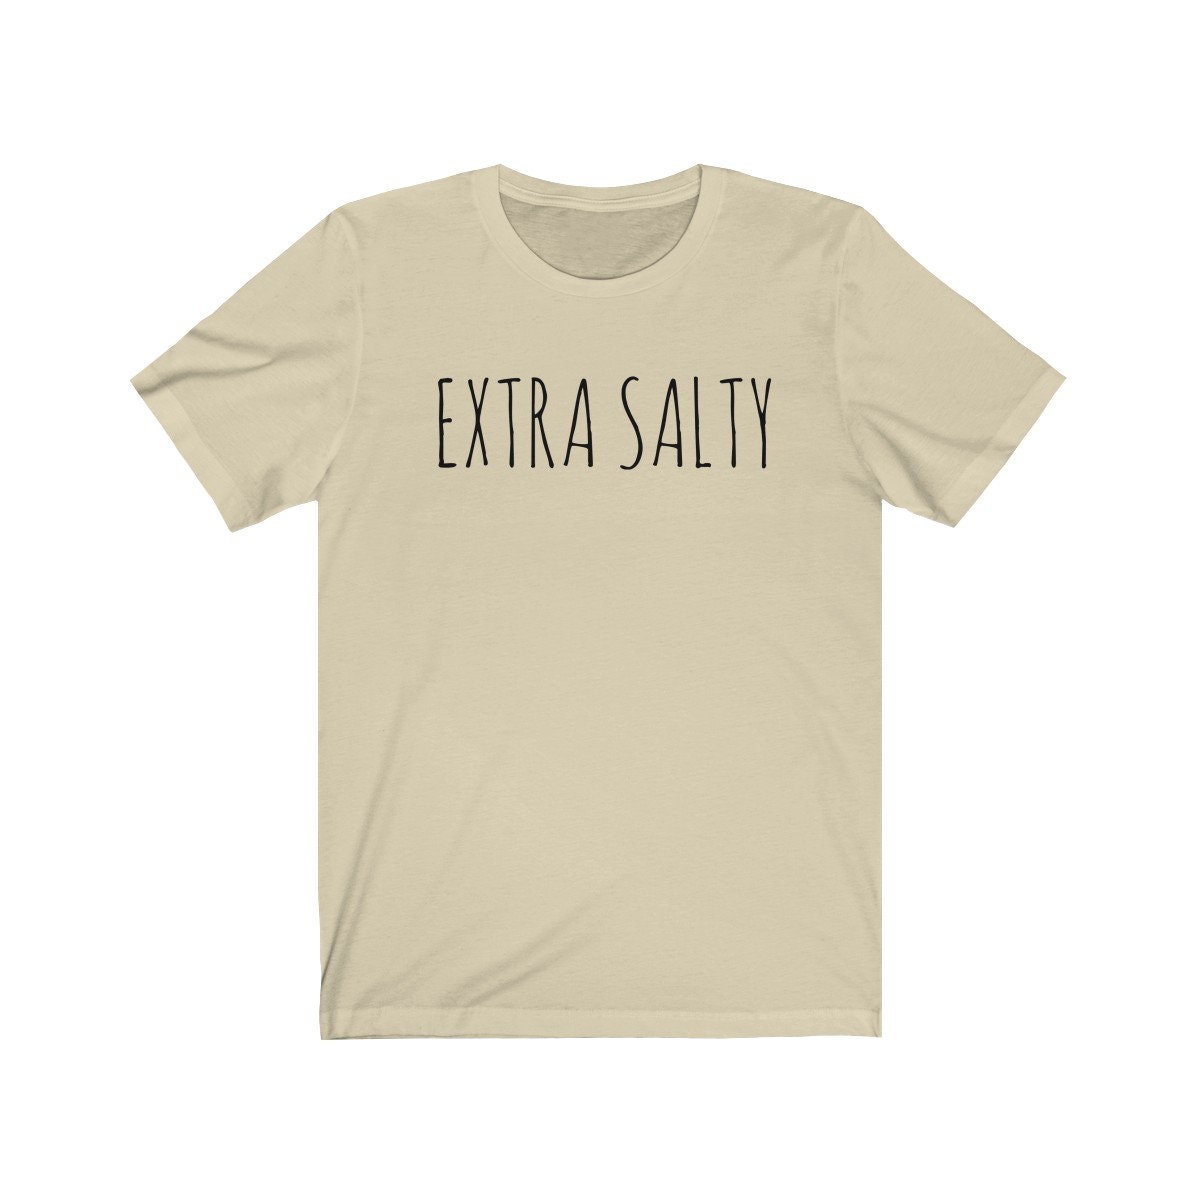 Extra Salty Shirt Don't Be Salty Shirt Salty Shirt Salty | Etsy